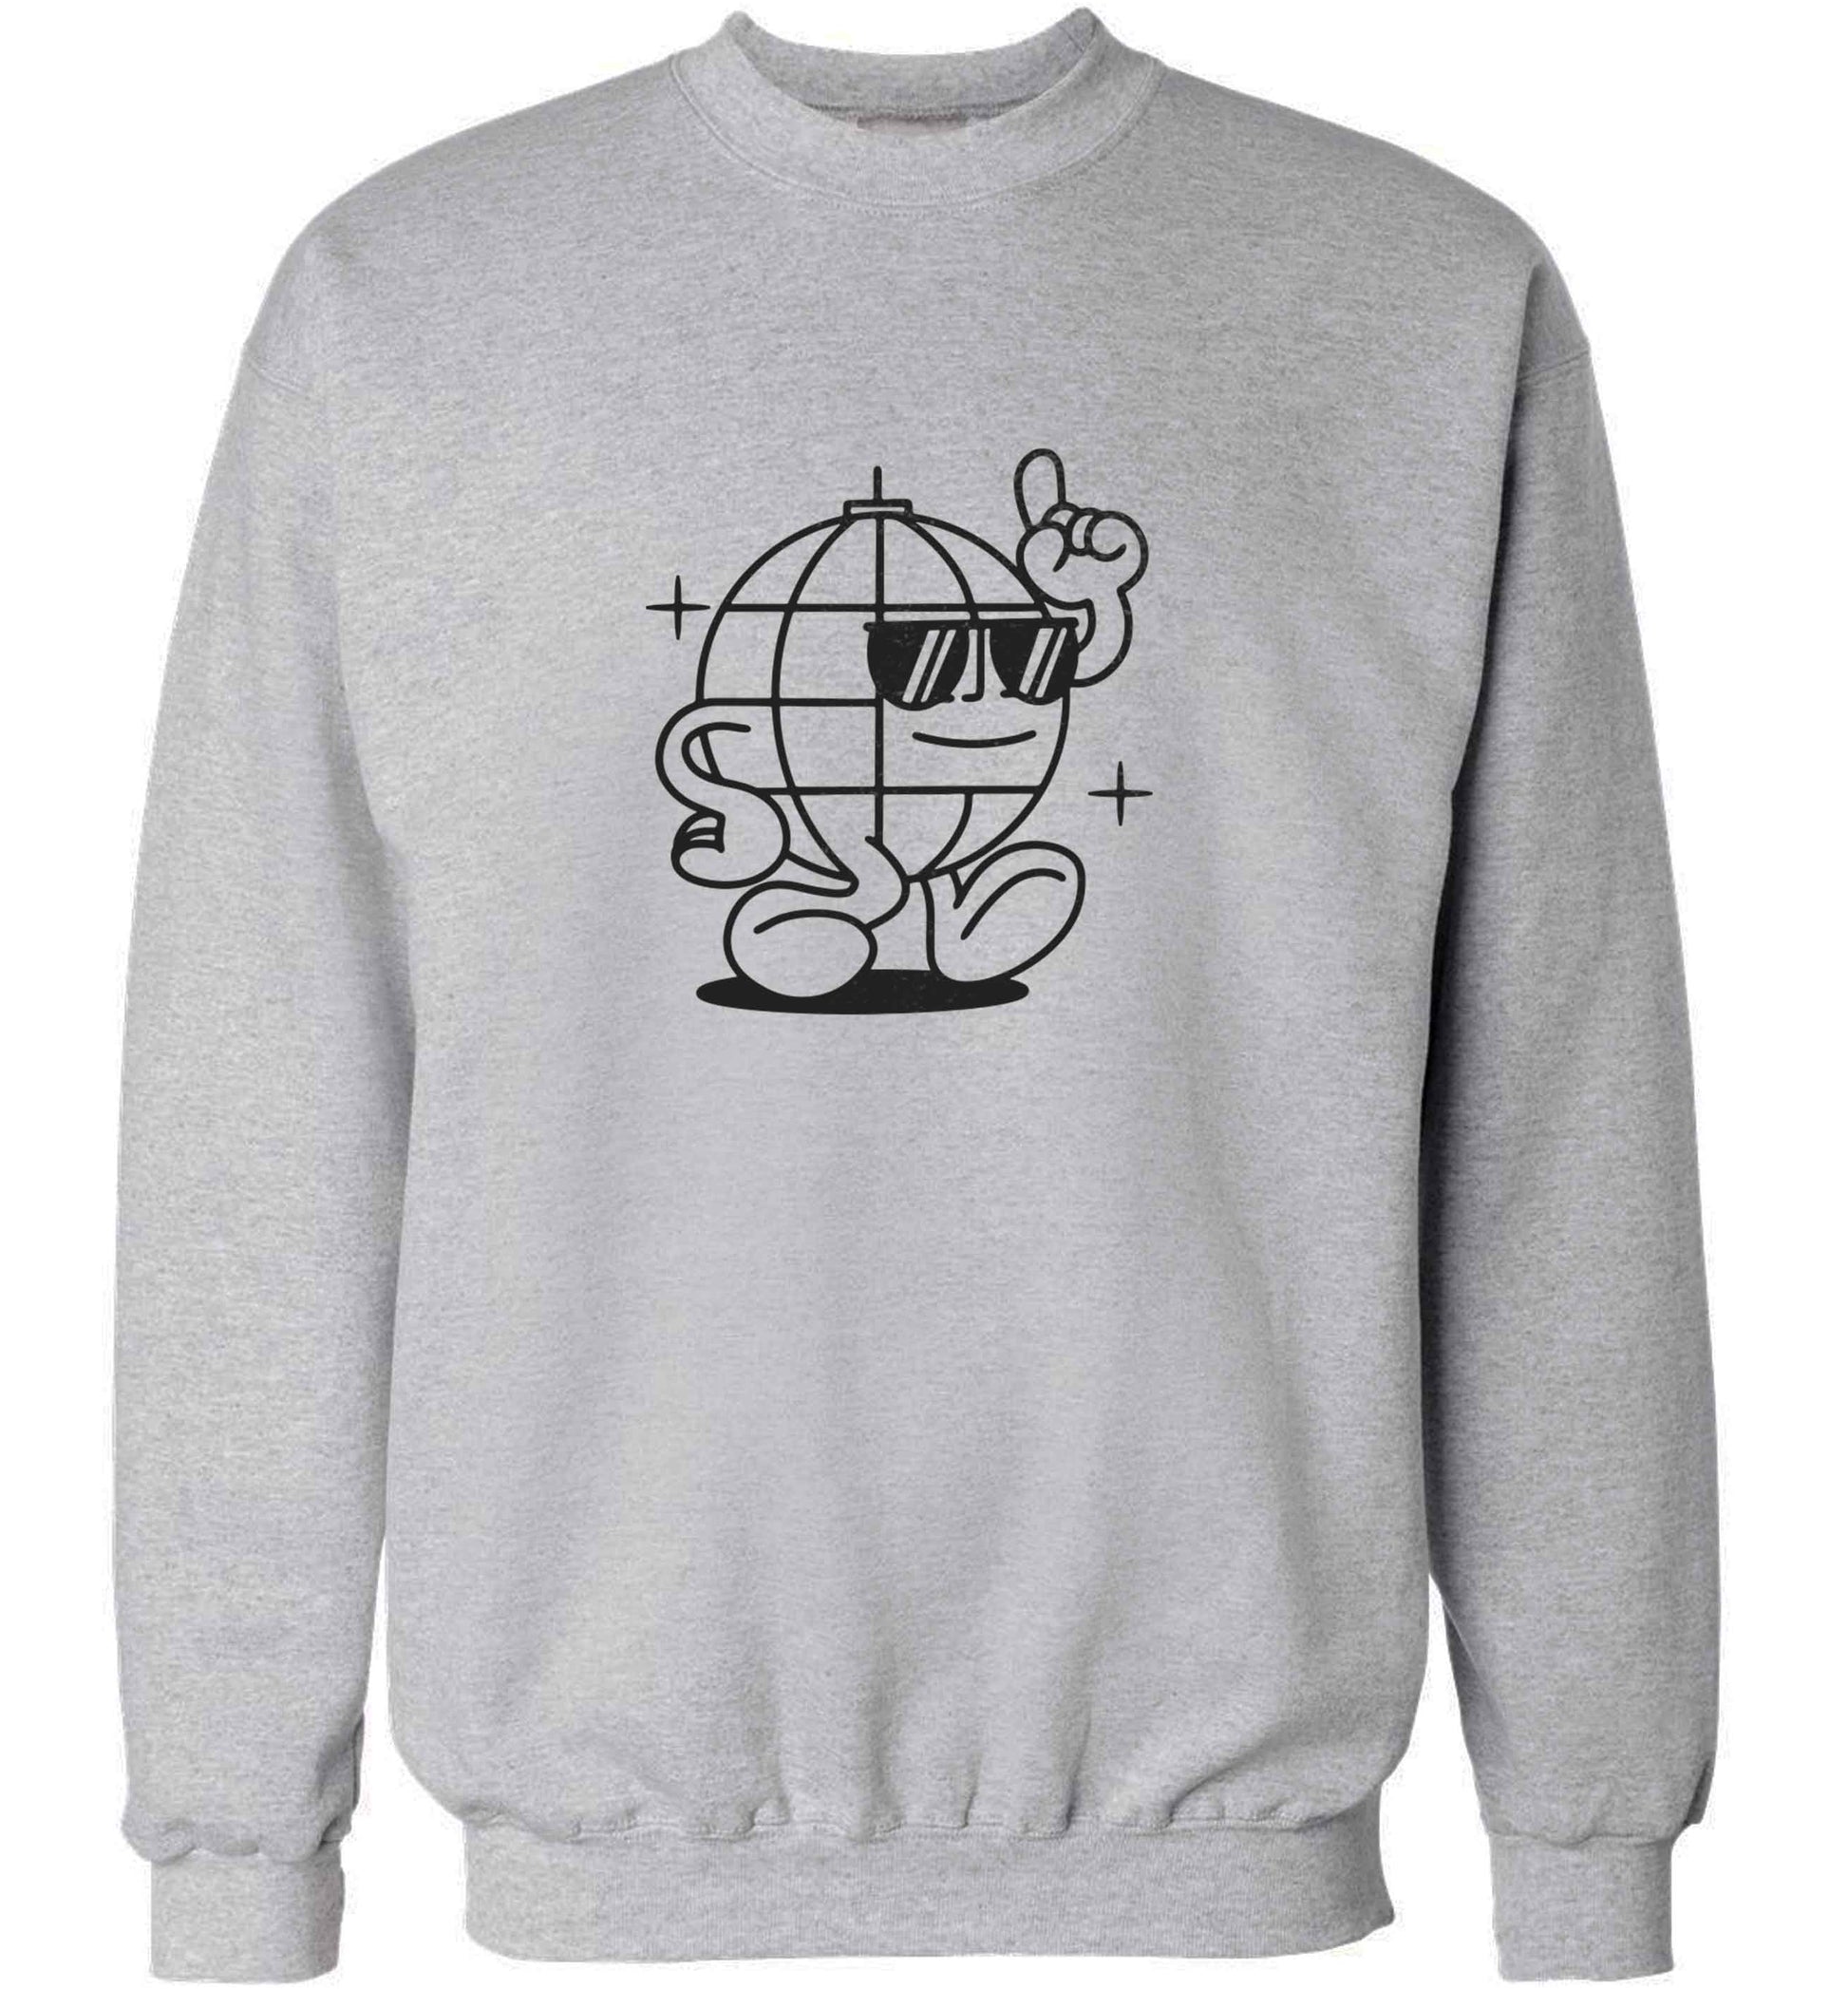 Disco ball adult's unisex grey sweater 2XL